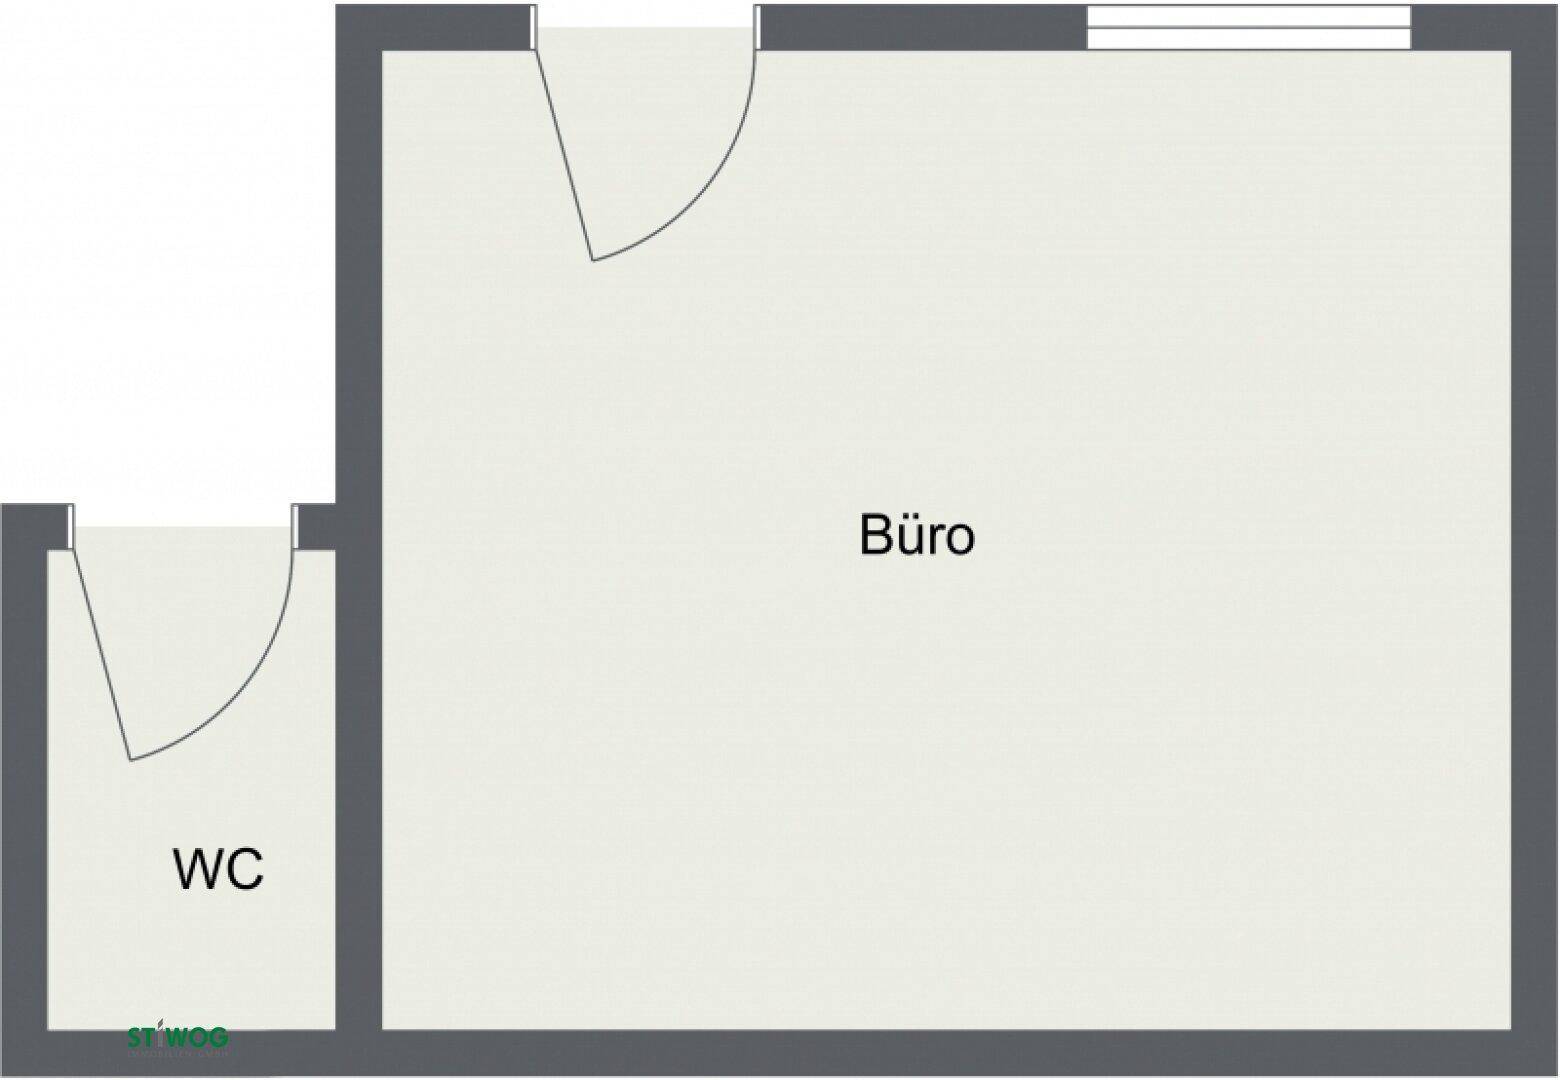 Büro - 1 Boden - 2D Floor Plan